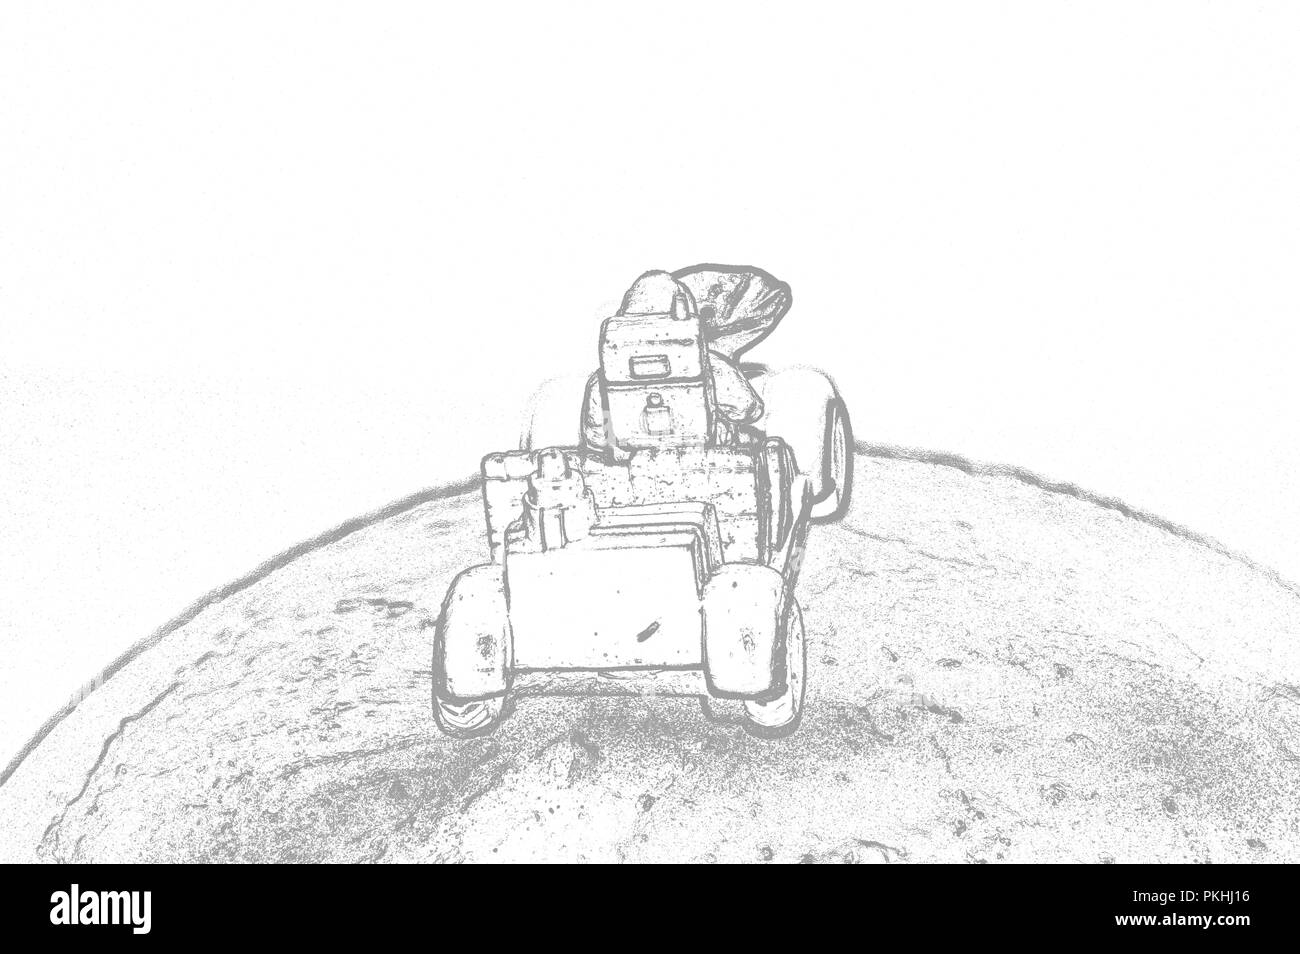 An astronaut on the moon rover on the moon. Illustration Stock Photo